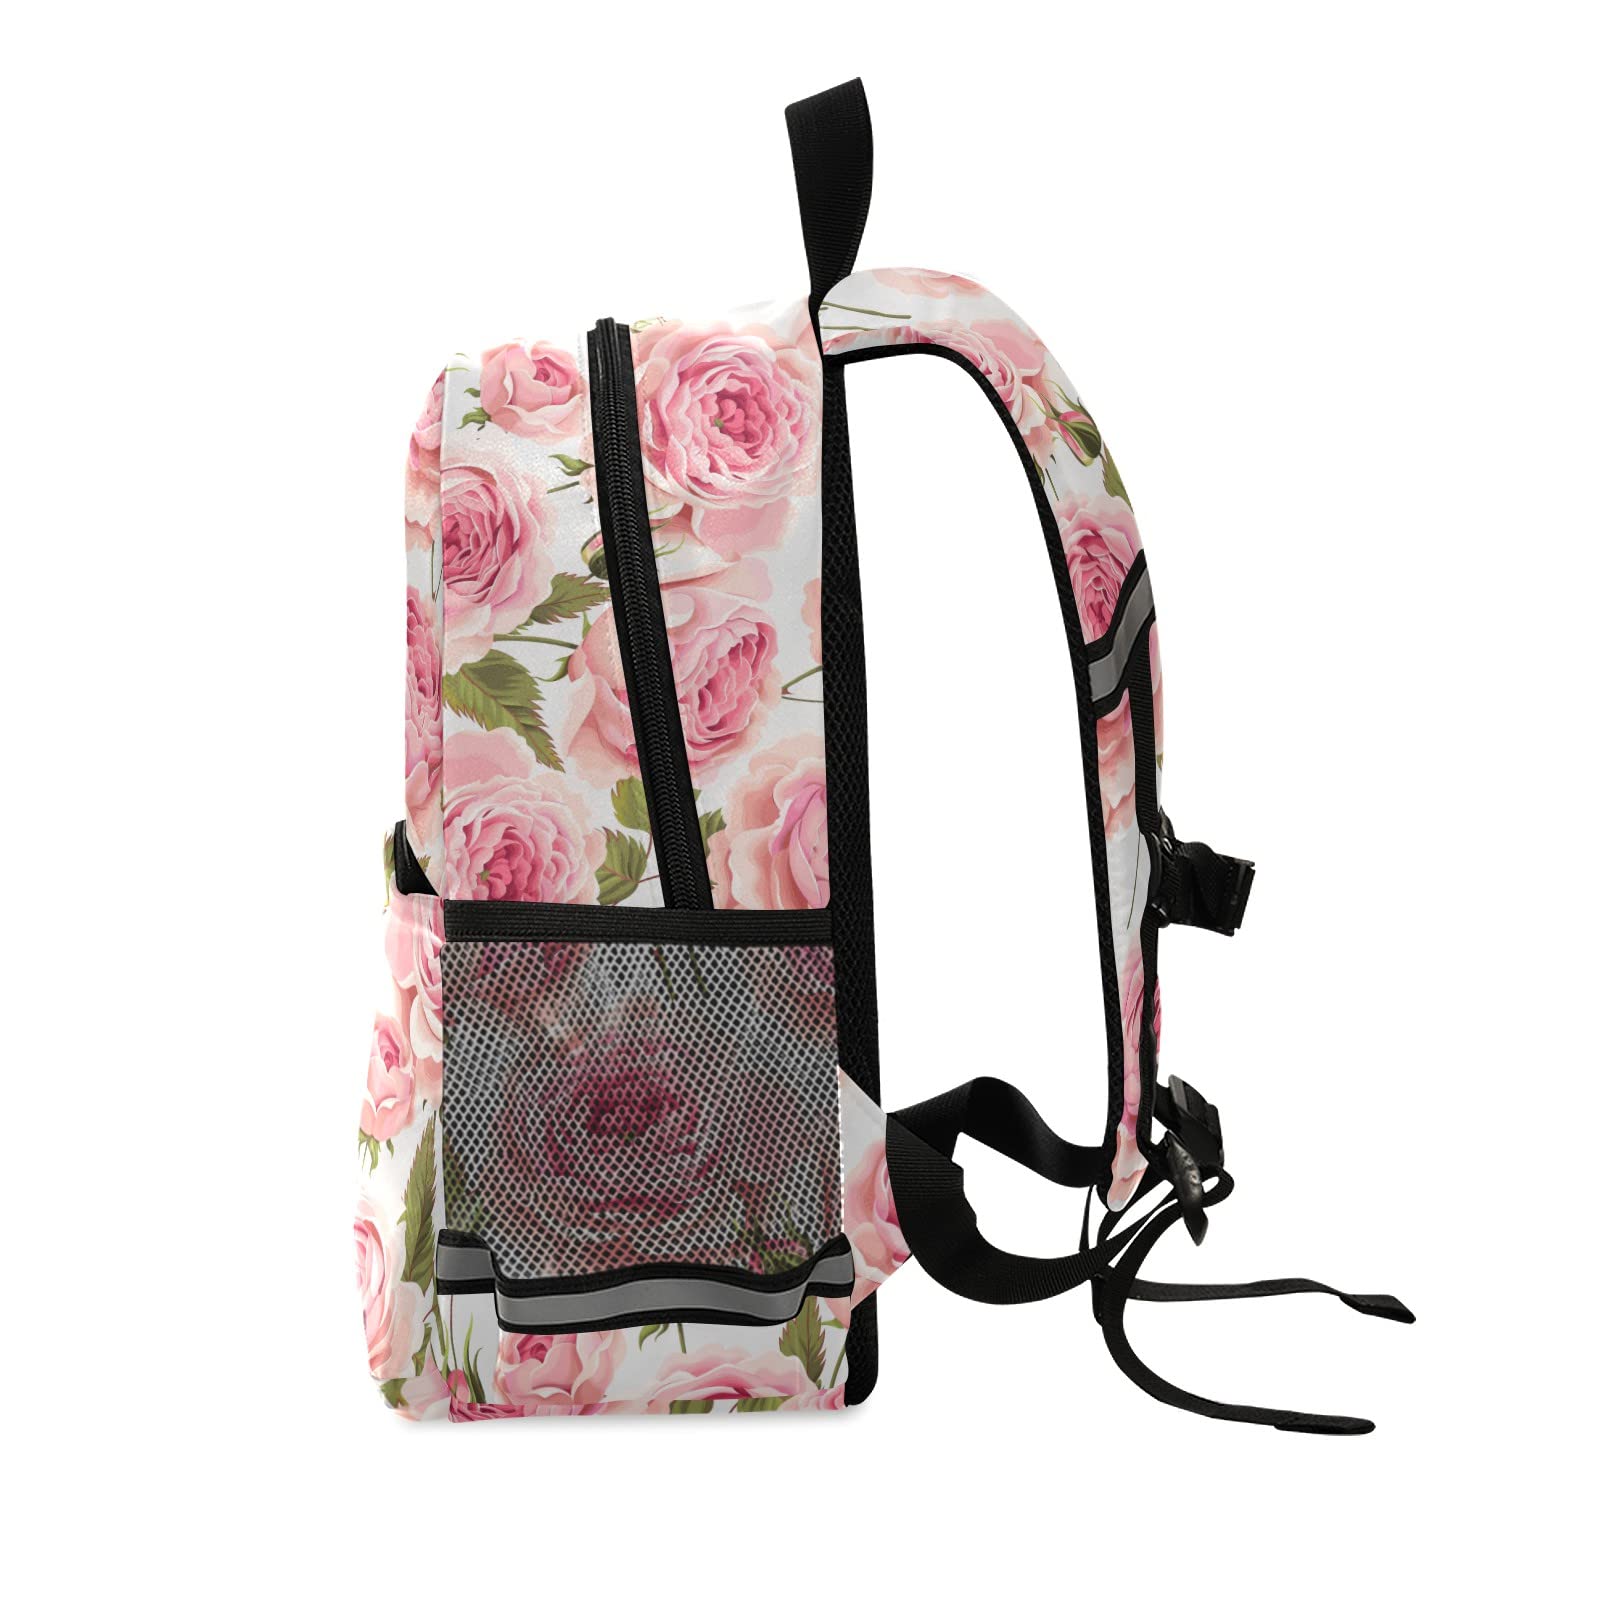 ALAZA Pink Rose Flower Kids Backpack Purse for Girls Boys Kindergarten Preschool Floral School Bag w/Chest Clip Leash Reflective Strip